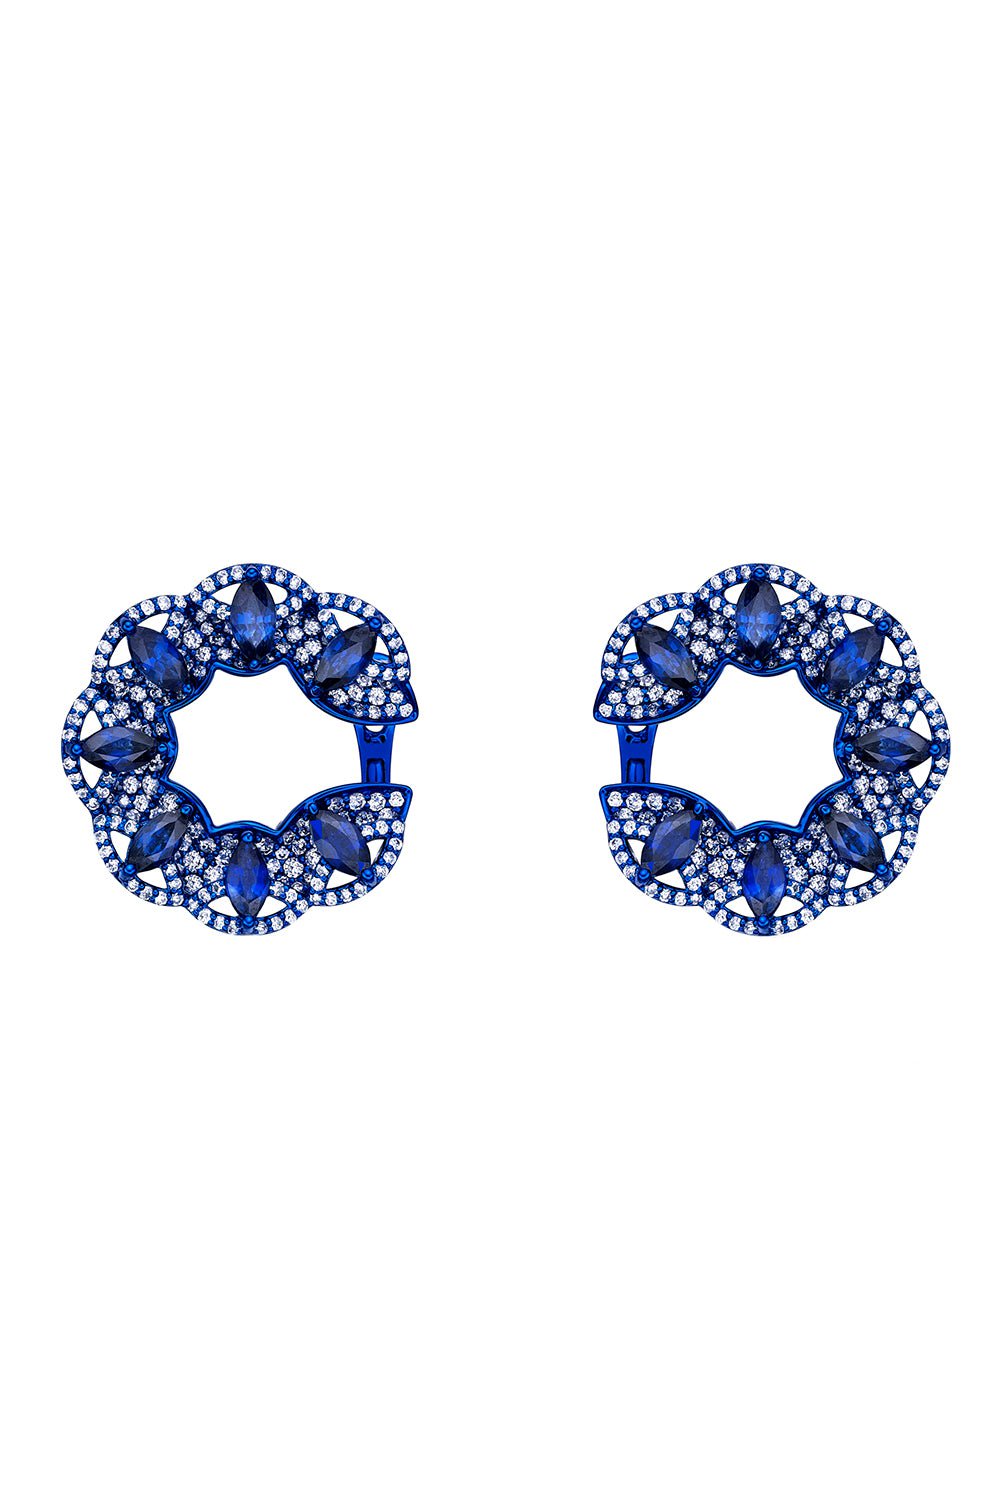 SABOO FINE JEWELS-Blue Sapphire Circle Earrings-WHITE GOLD